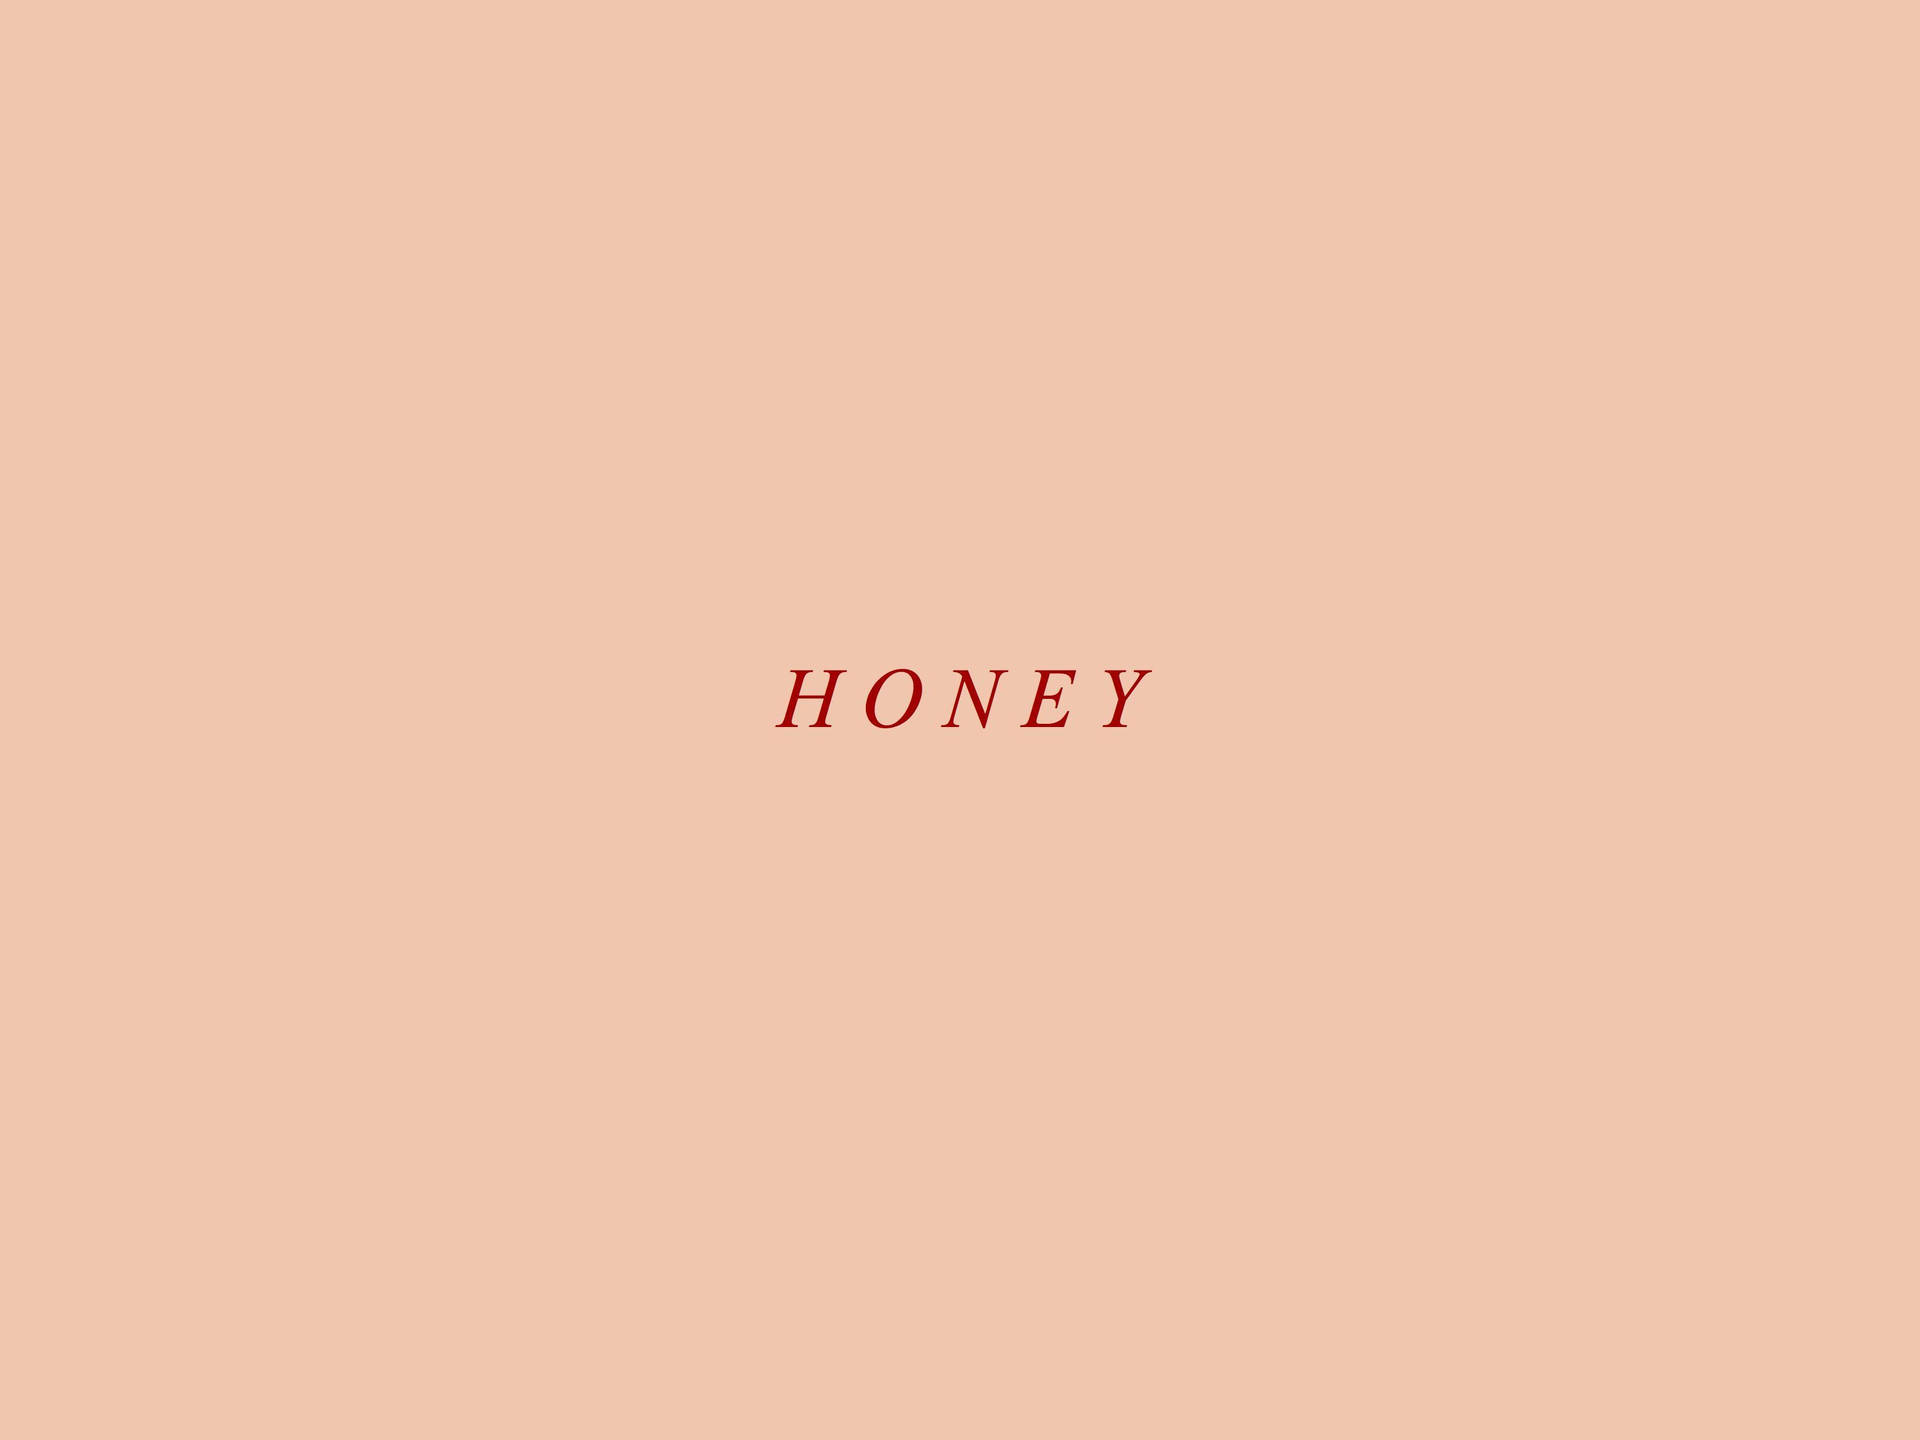 Minimalist Aesthetic Desktop Red Honey Word Wallpaper